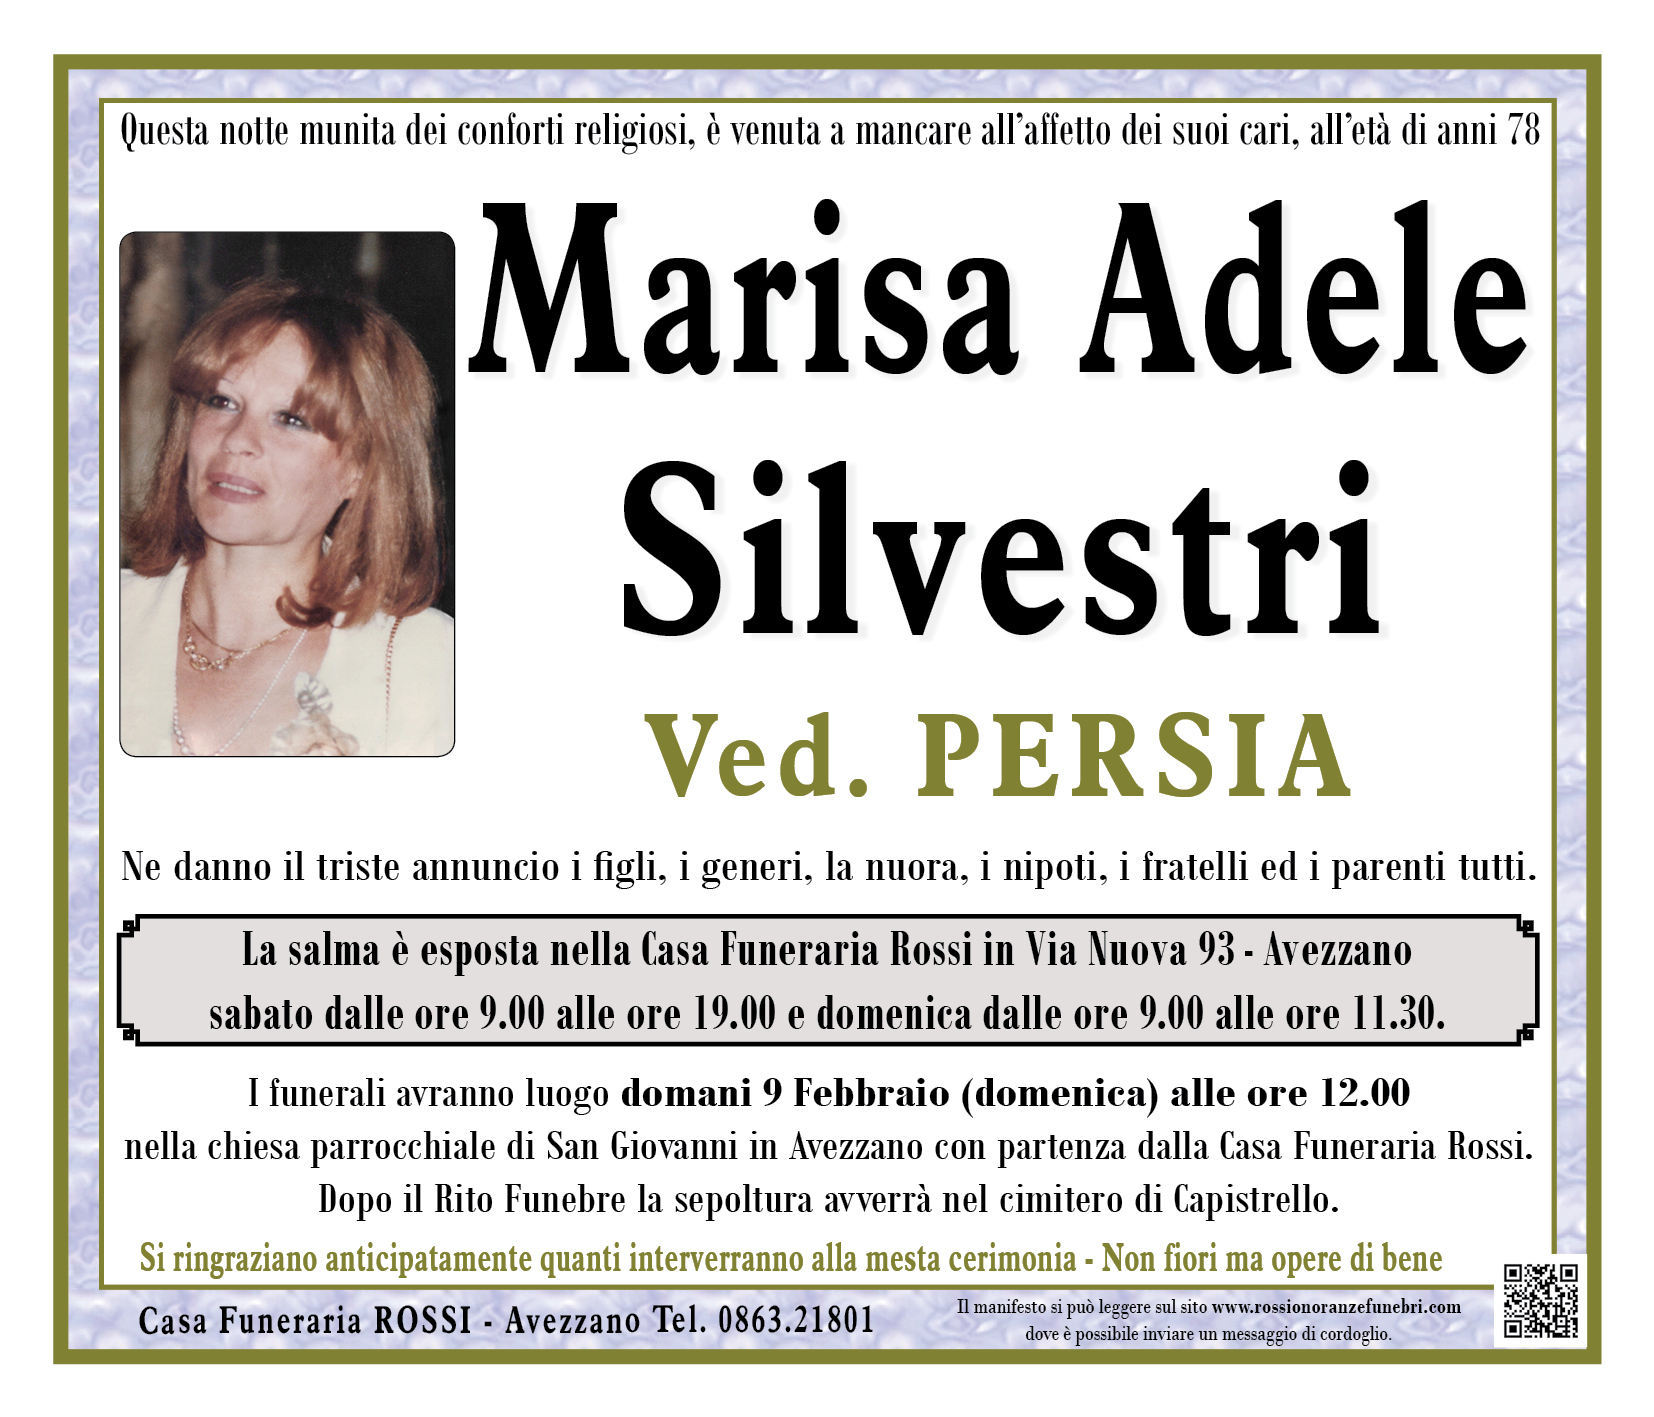 Marisa Adele Silvestri